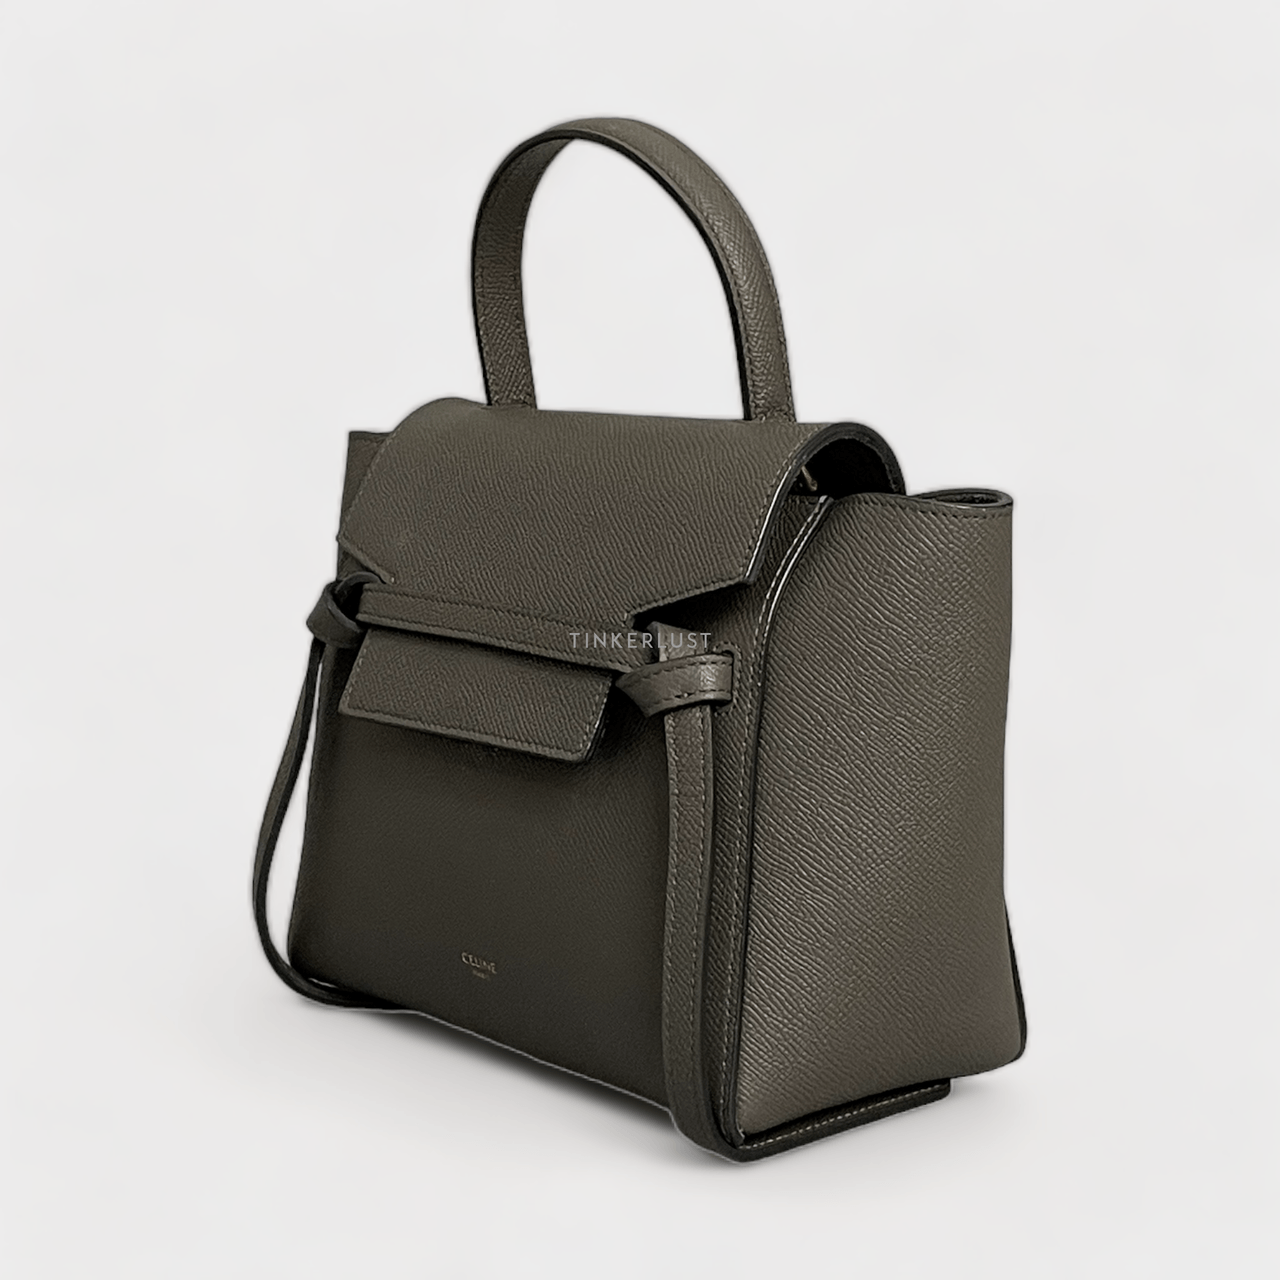  Celine Nano Belt Bag Grey